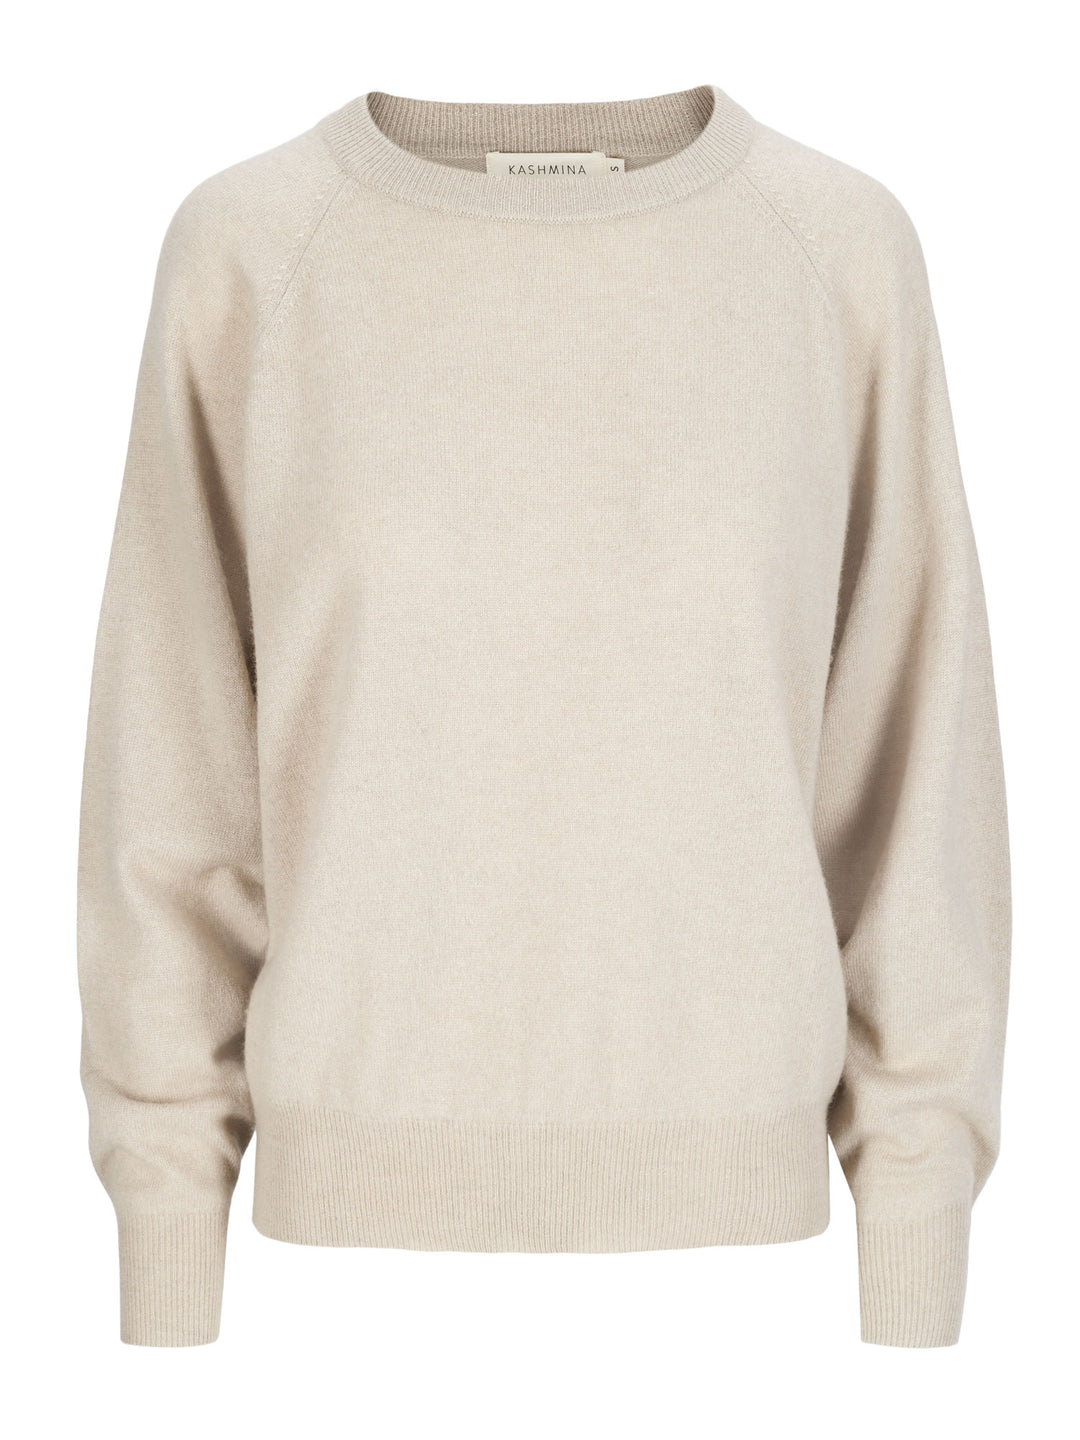 Cashmere sweater "Embla" 100% cashmere, Norwegian design from Kashmina